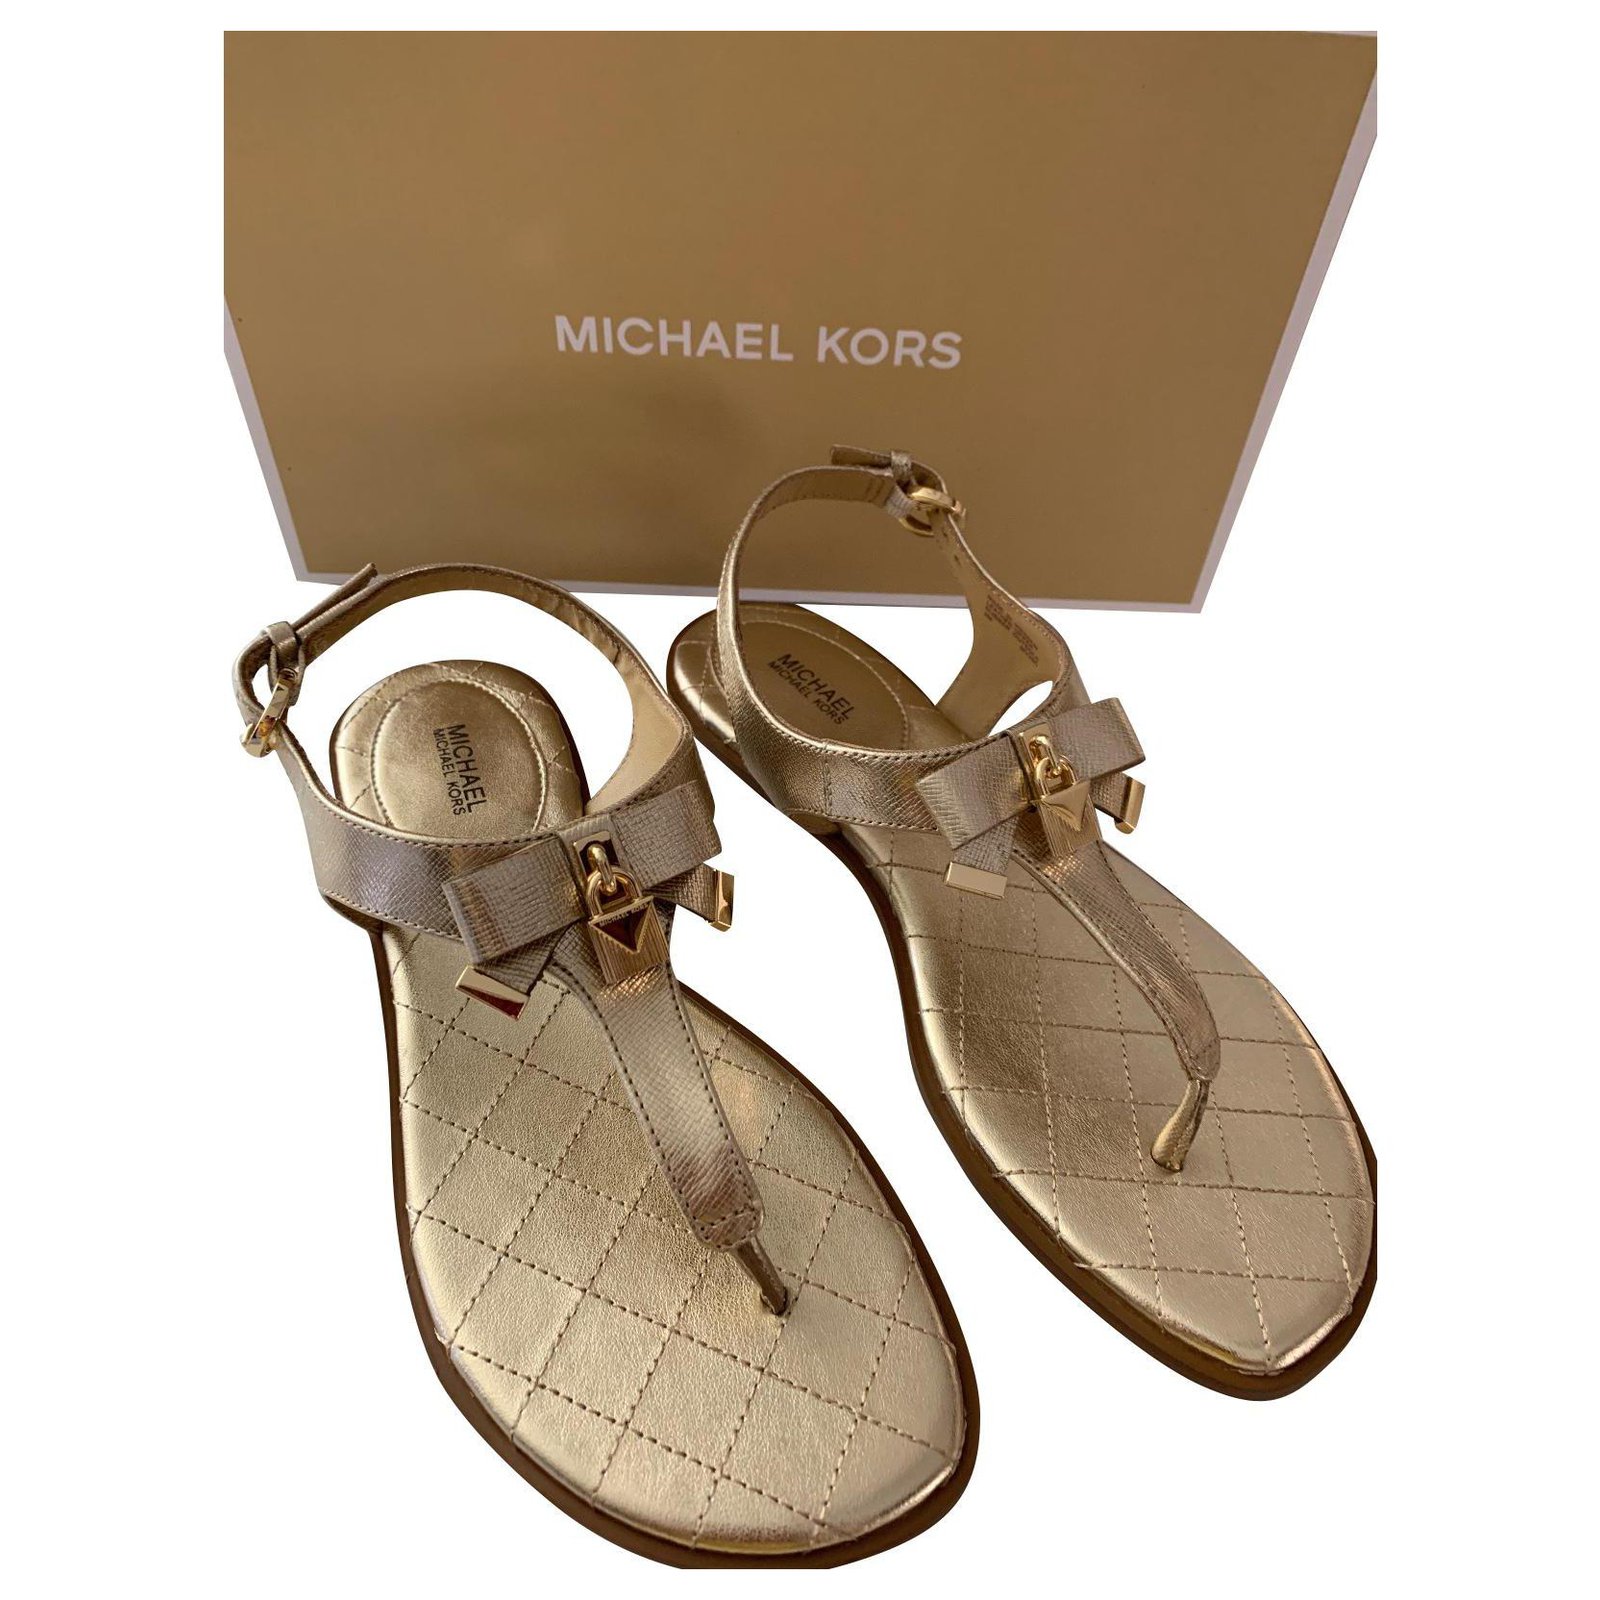 Michael Kors sandals Golden Leather ref 